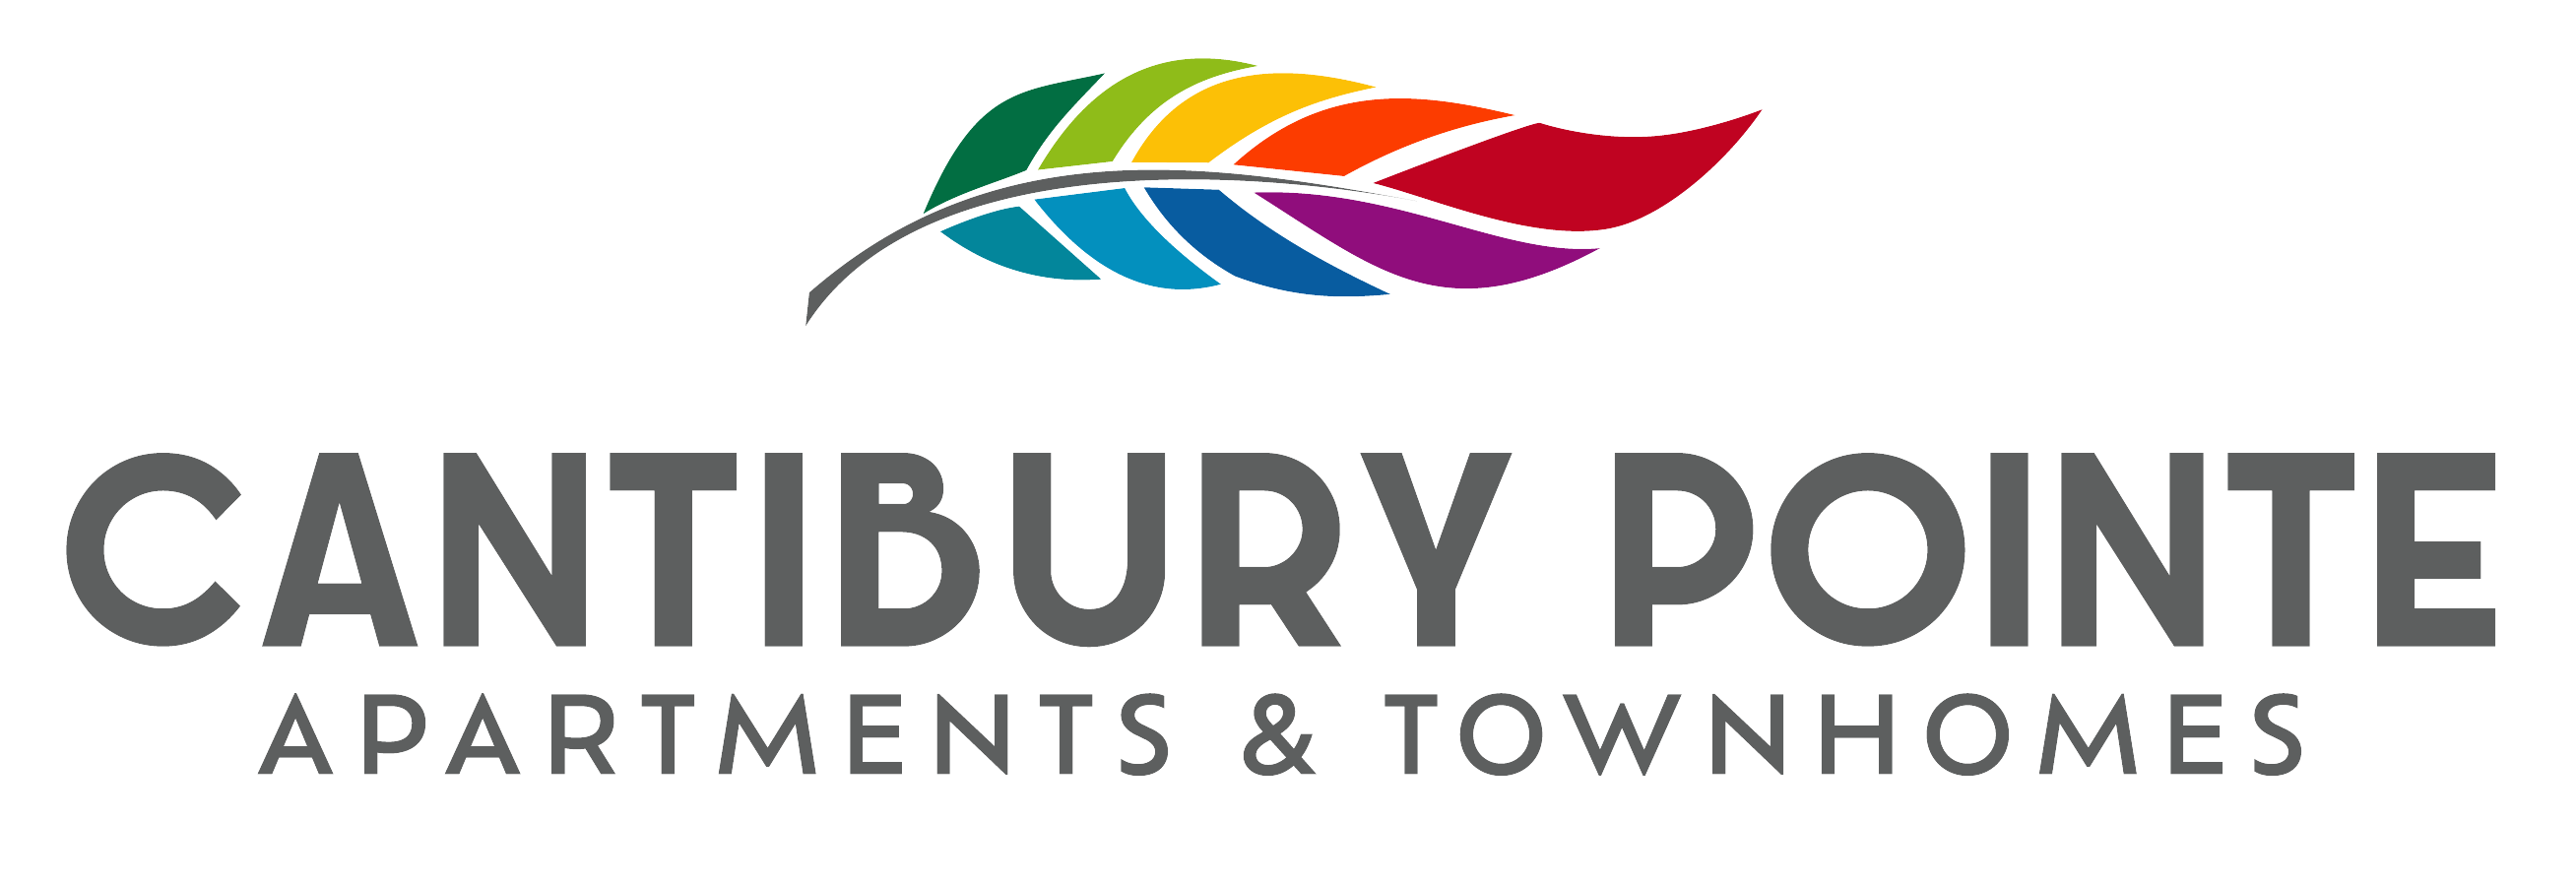 Cantibury Pointe Townhomes logo